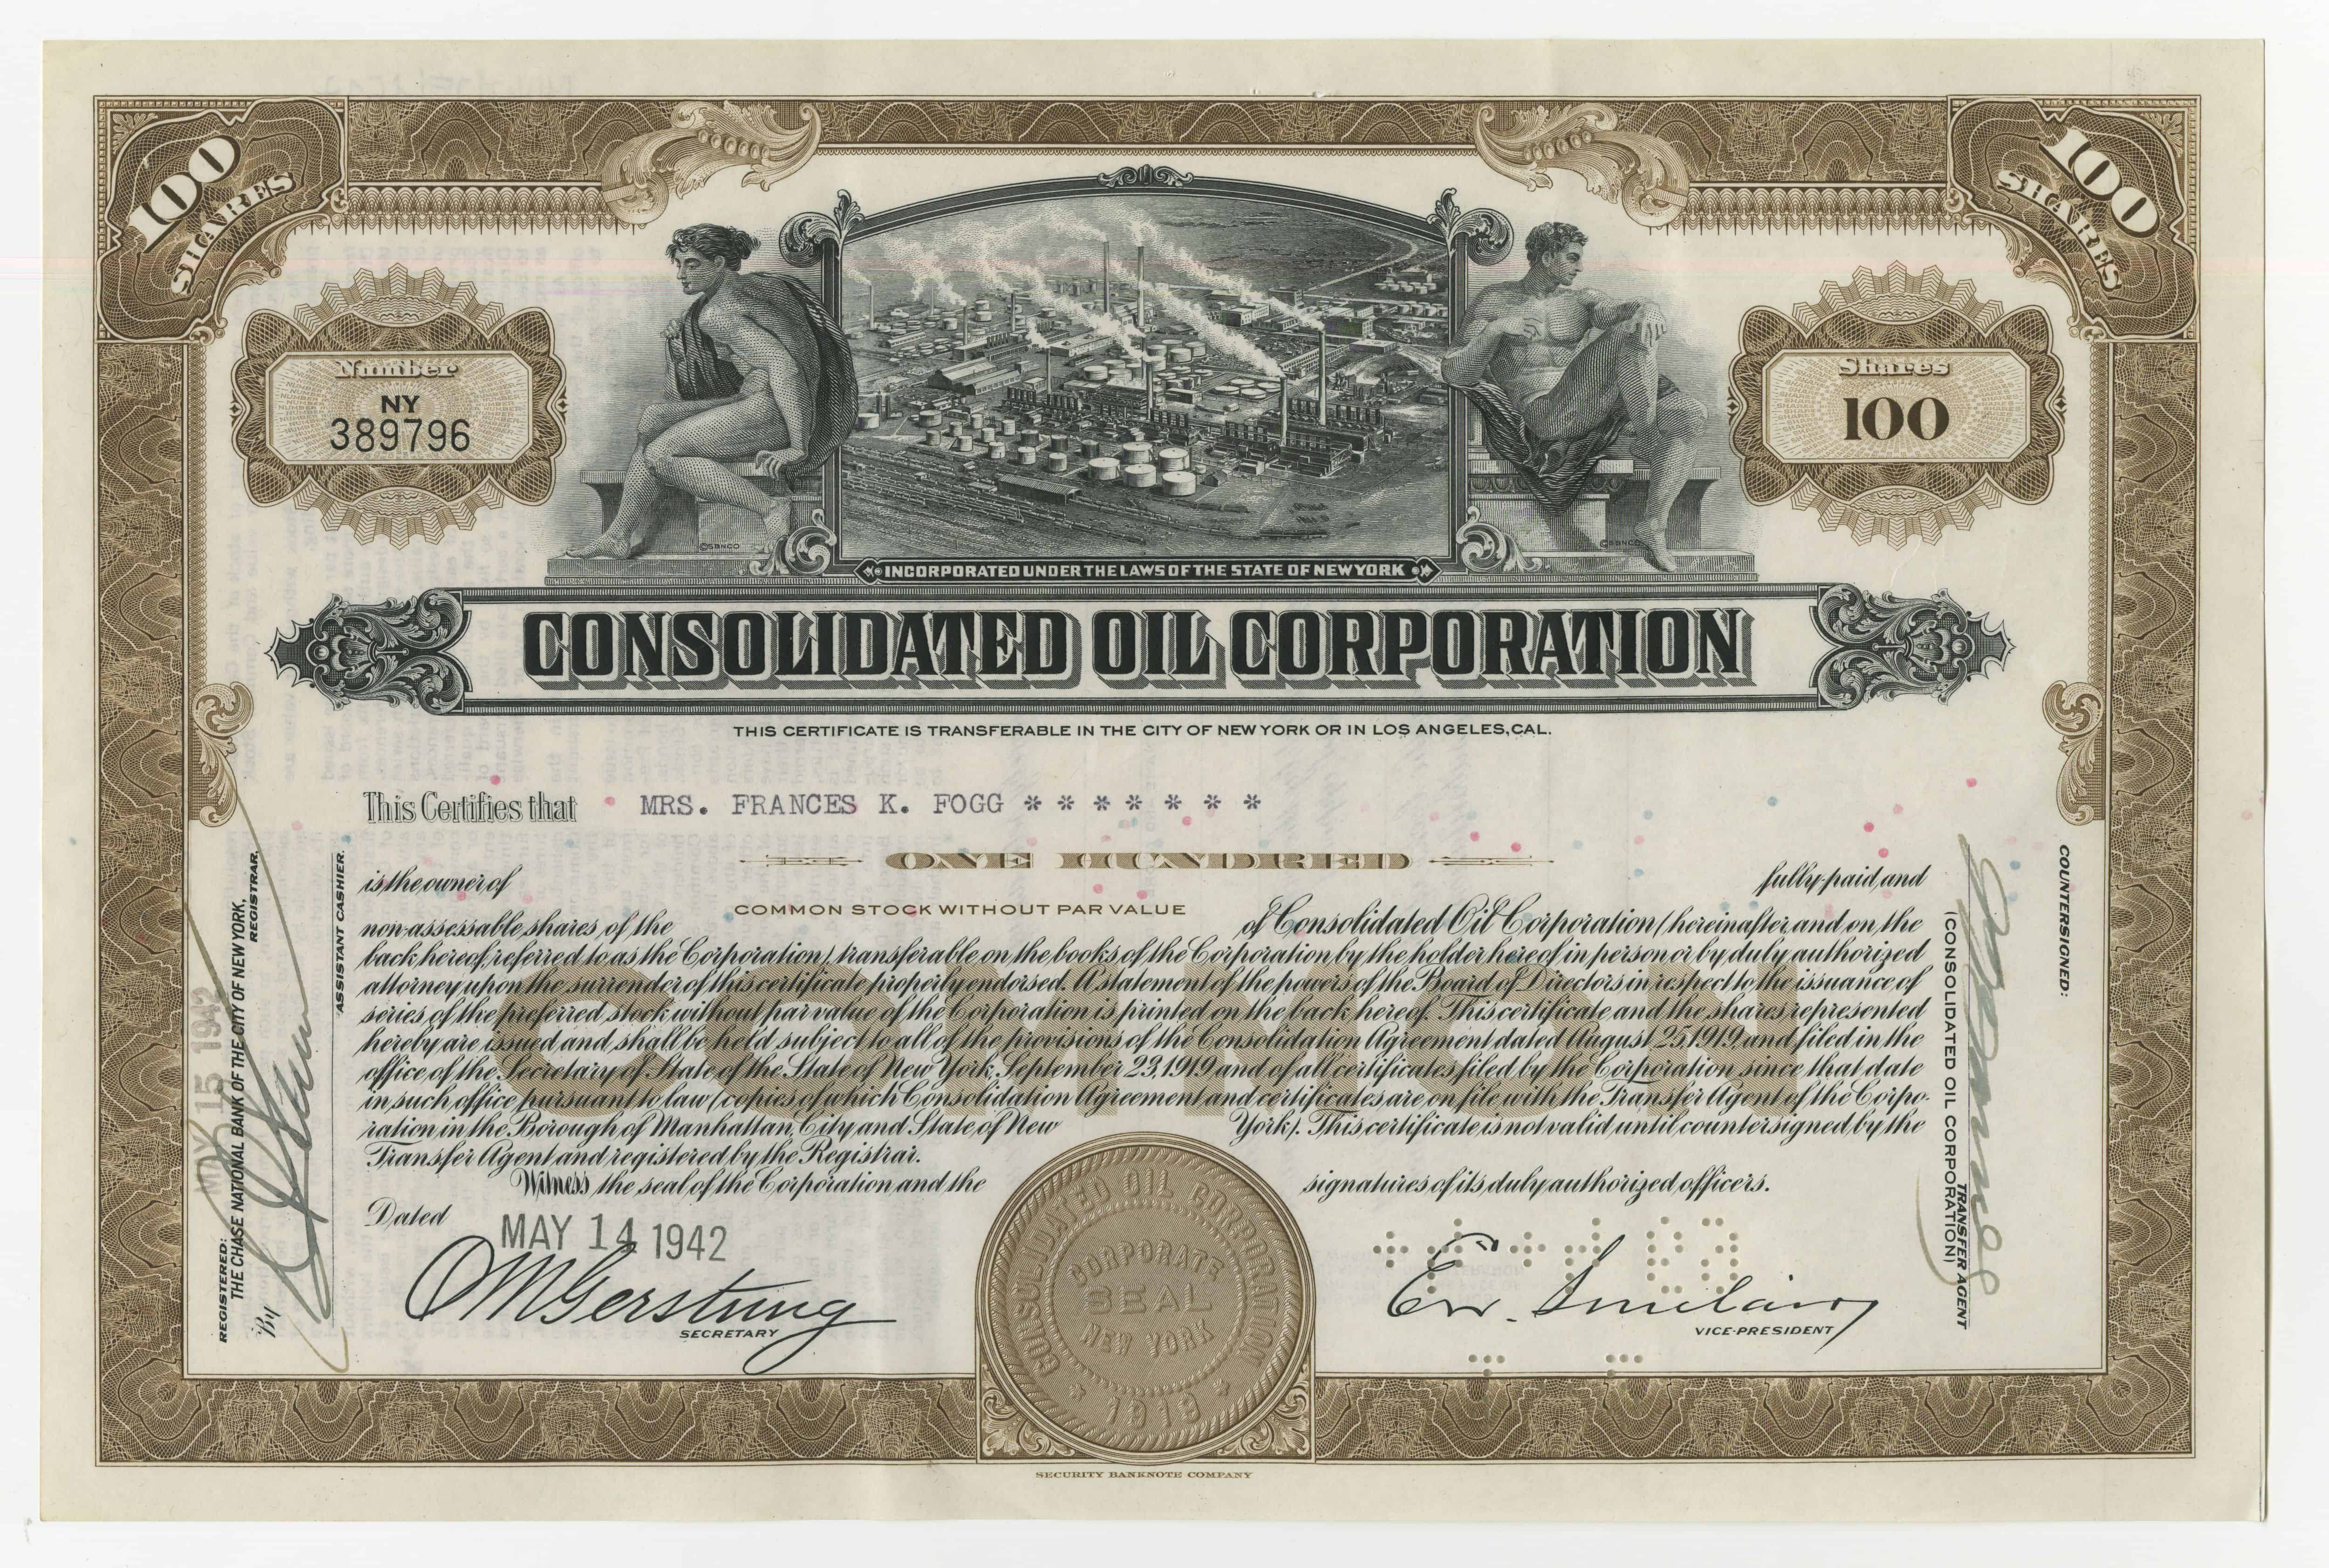 100 akcji Consolidated Oil Corporation z dnia 14 maja 1942 roku